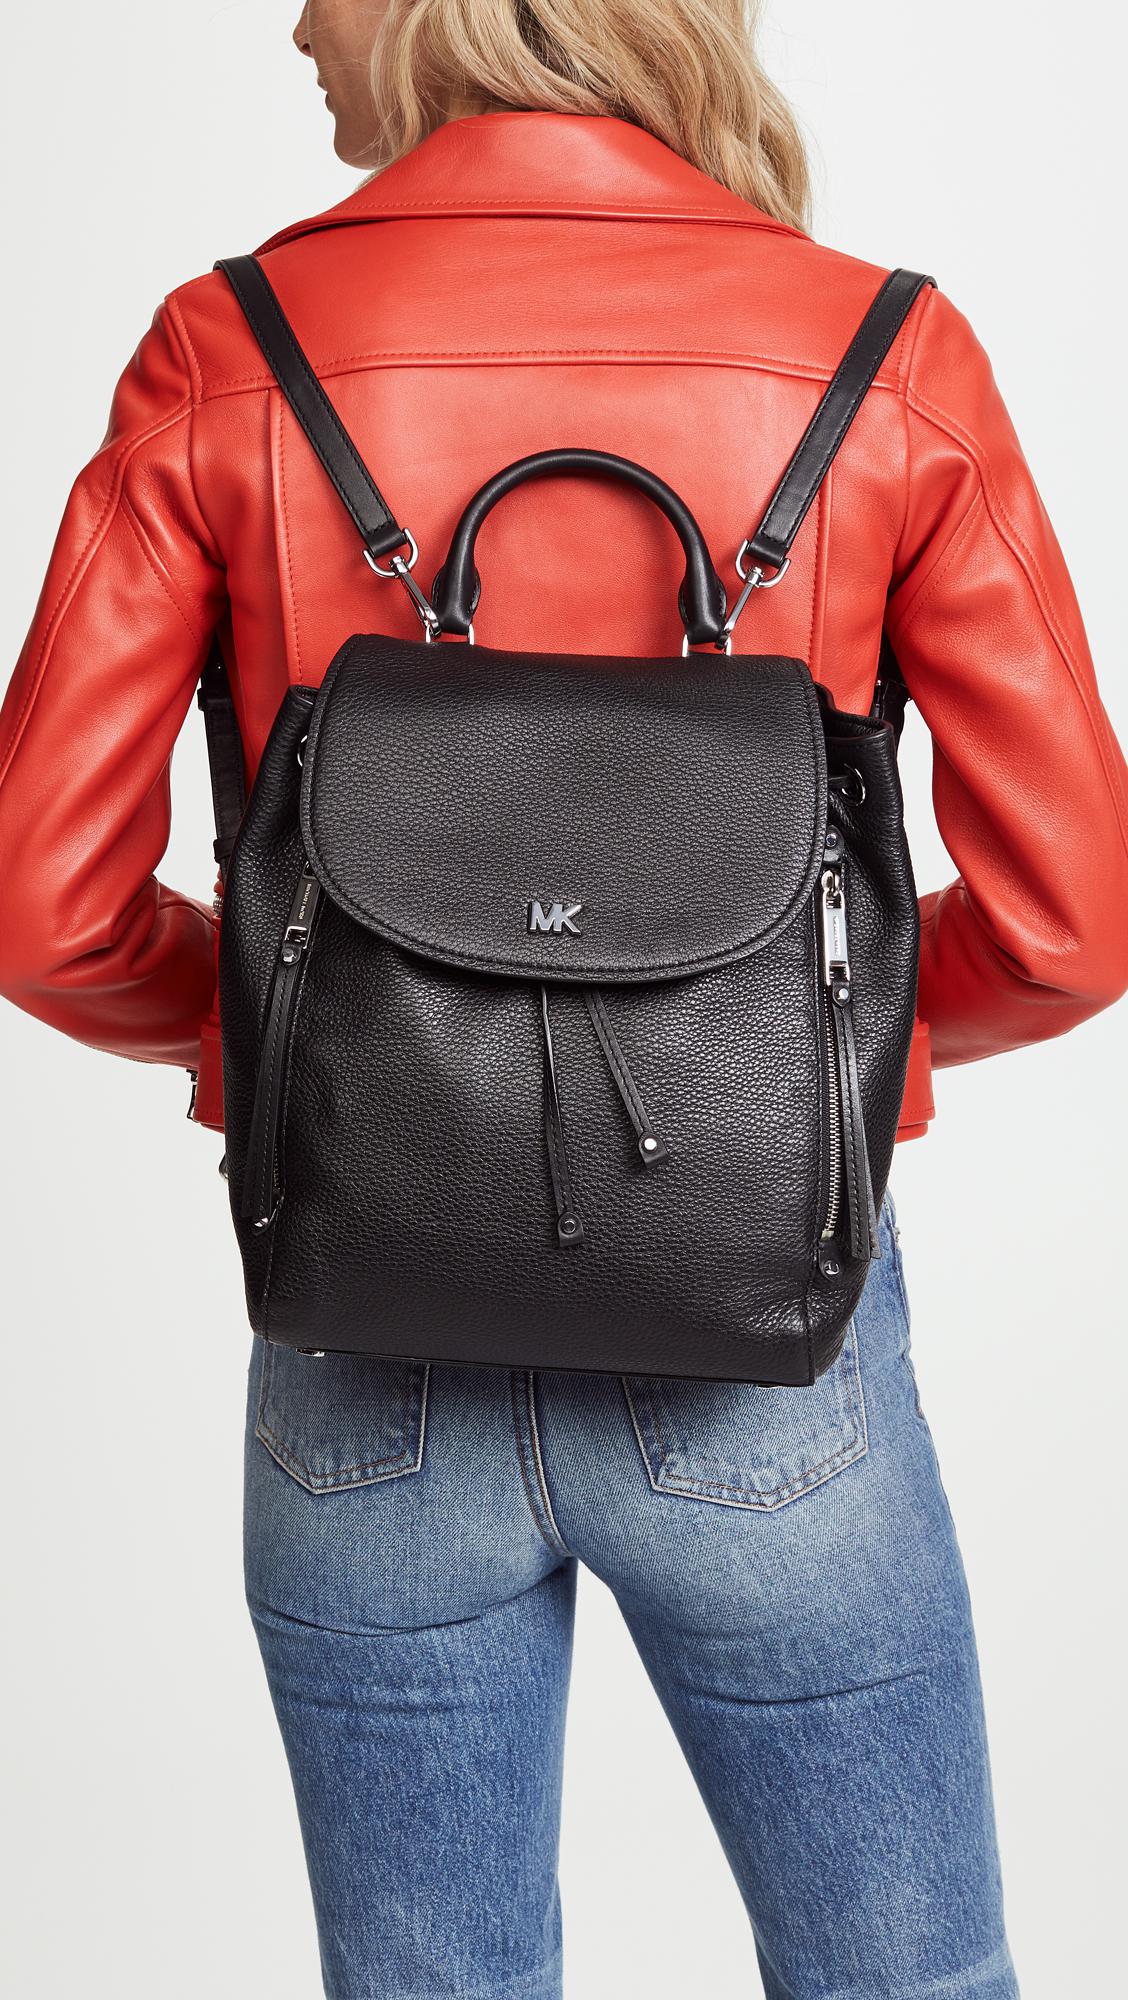 michael michael kors evie medium leather backpack